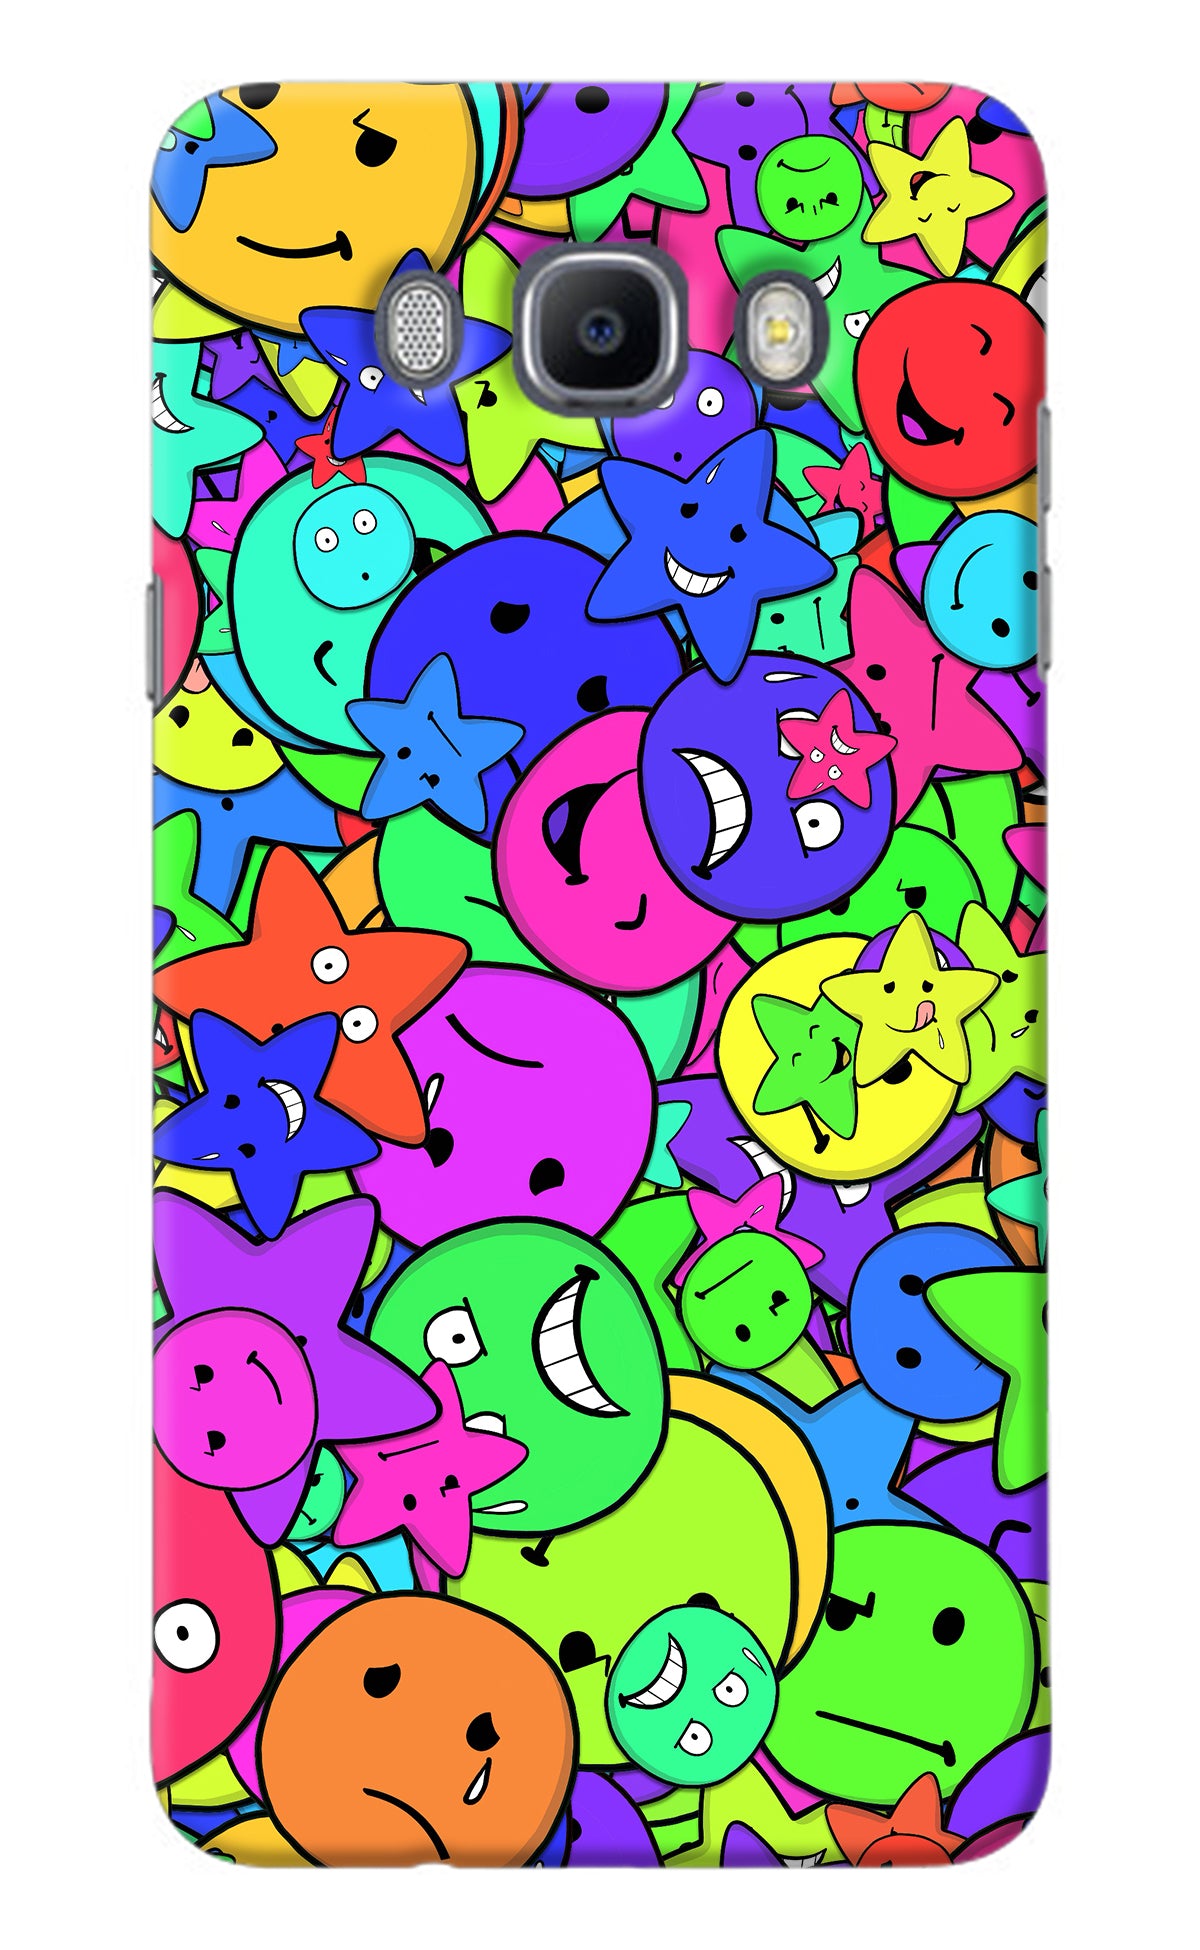 Fun Doodle Samsung J7 2016 Back Cover